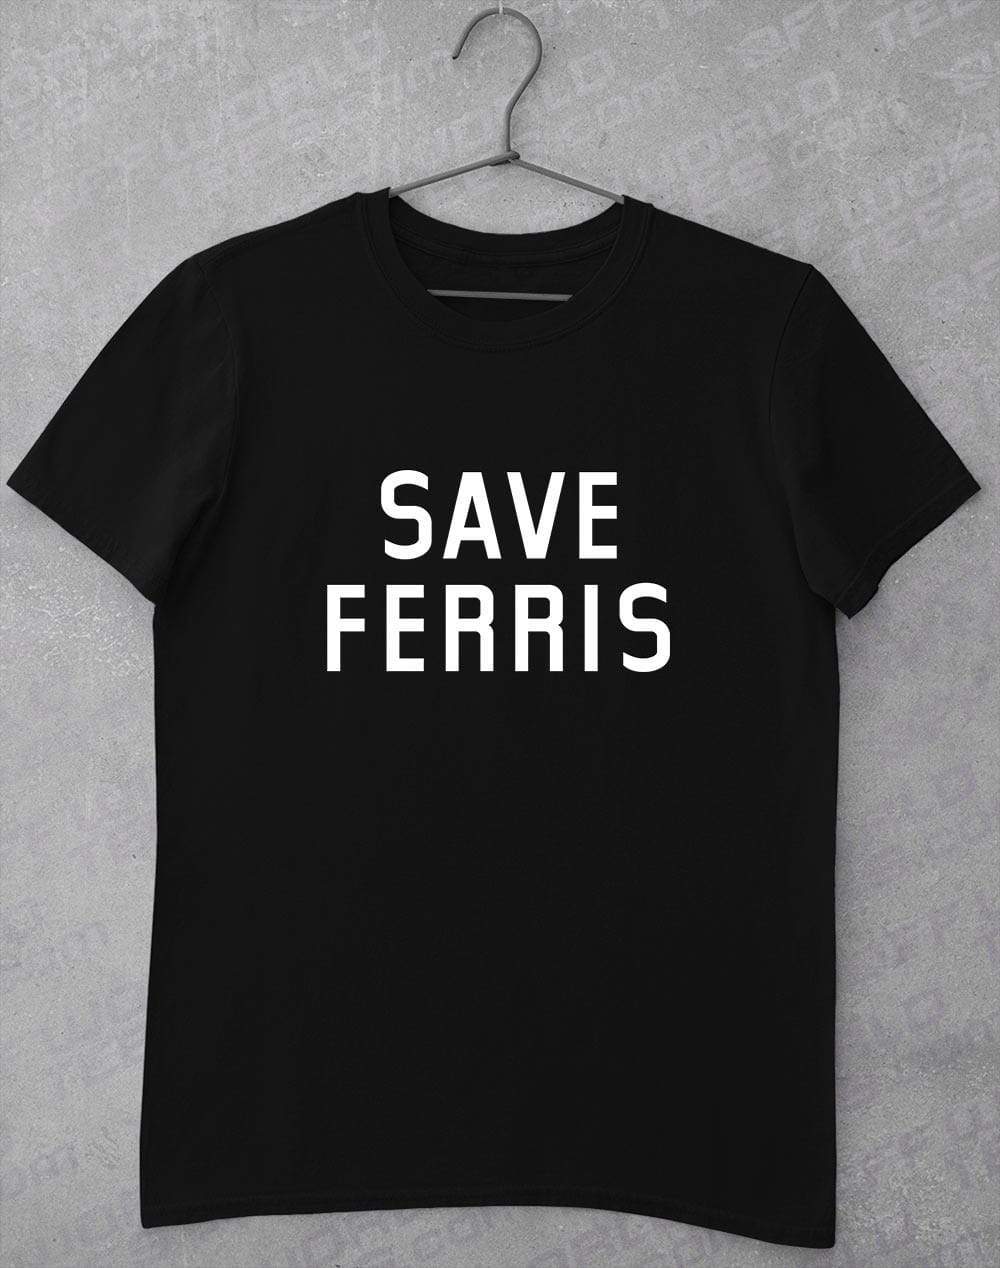 Save Ferris T-Shirt S / Black  - Off World Tees